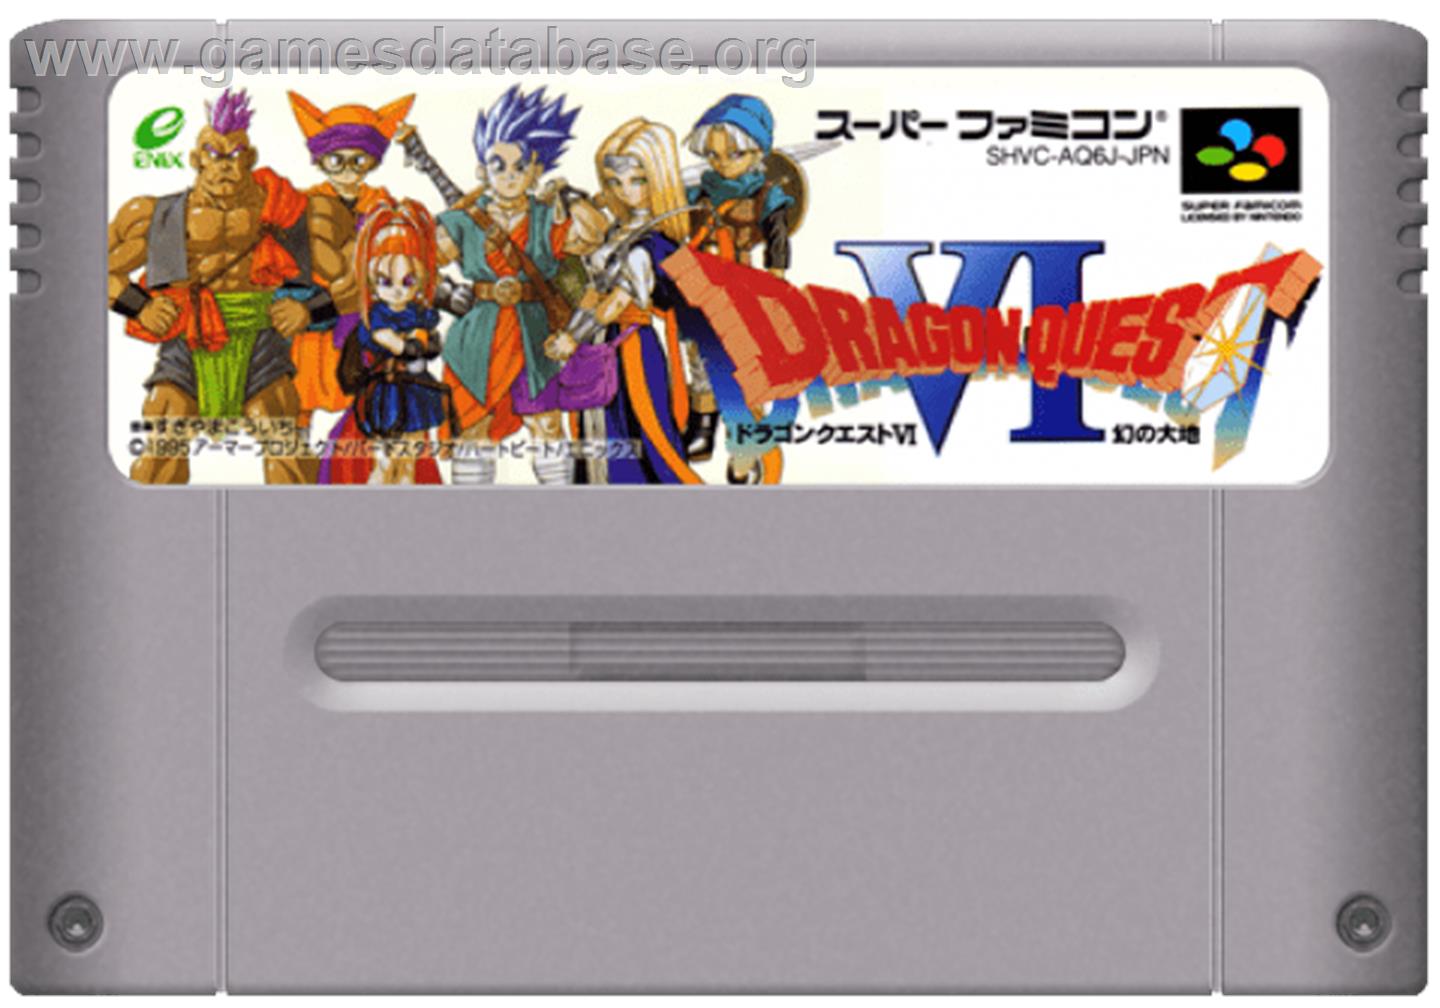 Dragon Quest VI: Maboroshi no Daichi - Nintendo SNES - Artwork - Cartridge